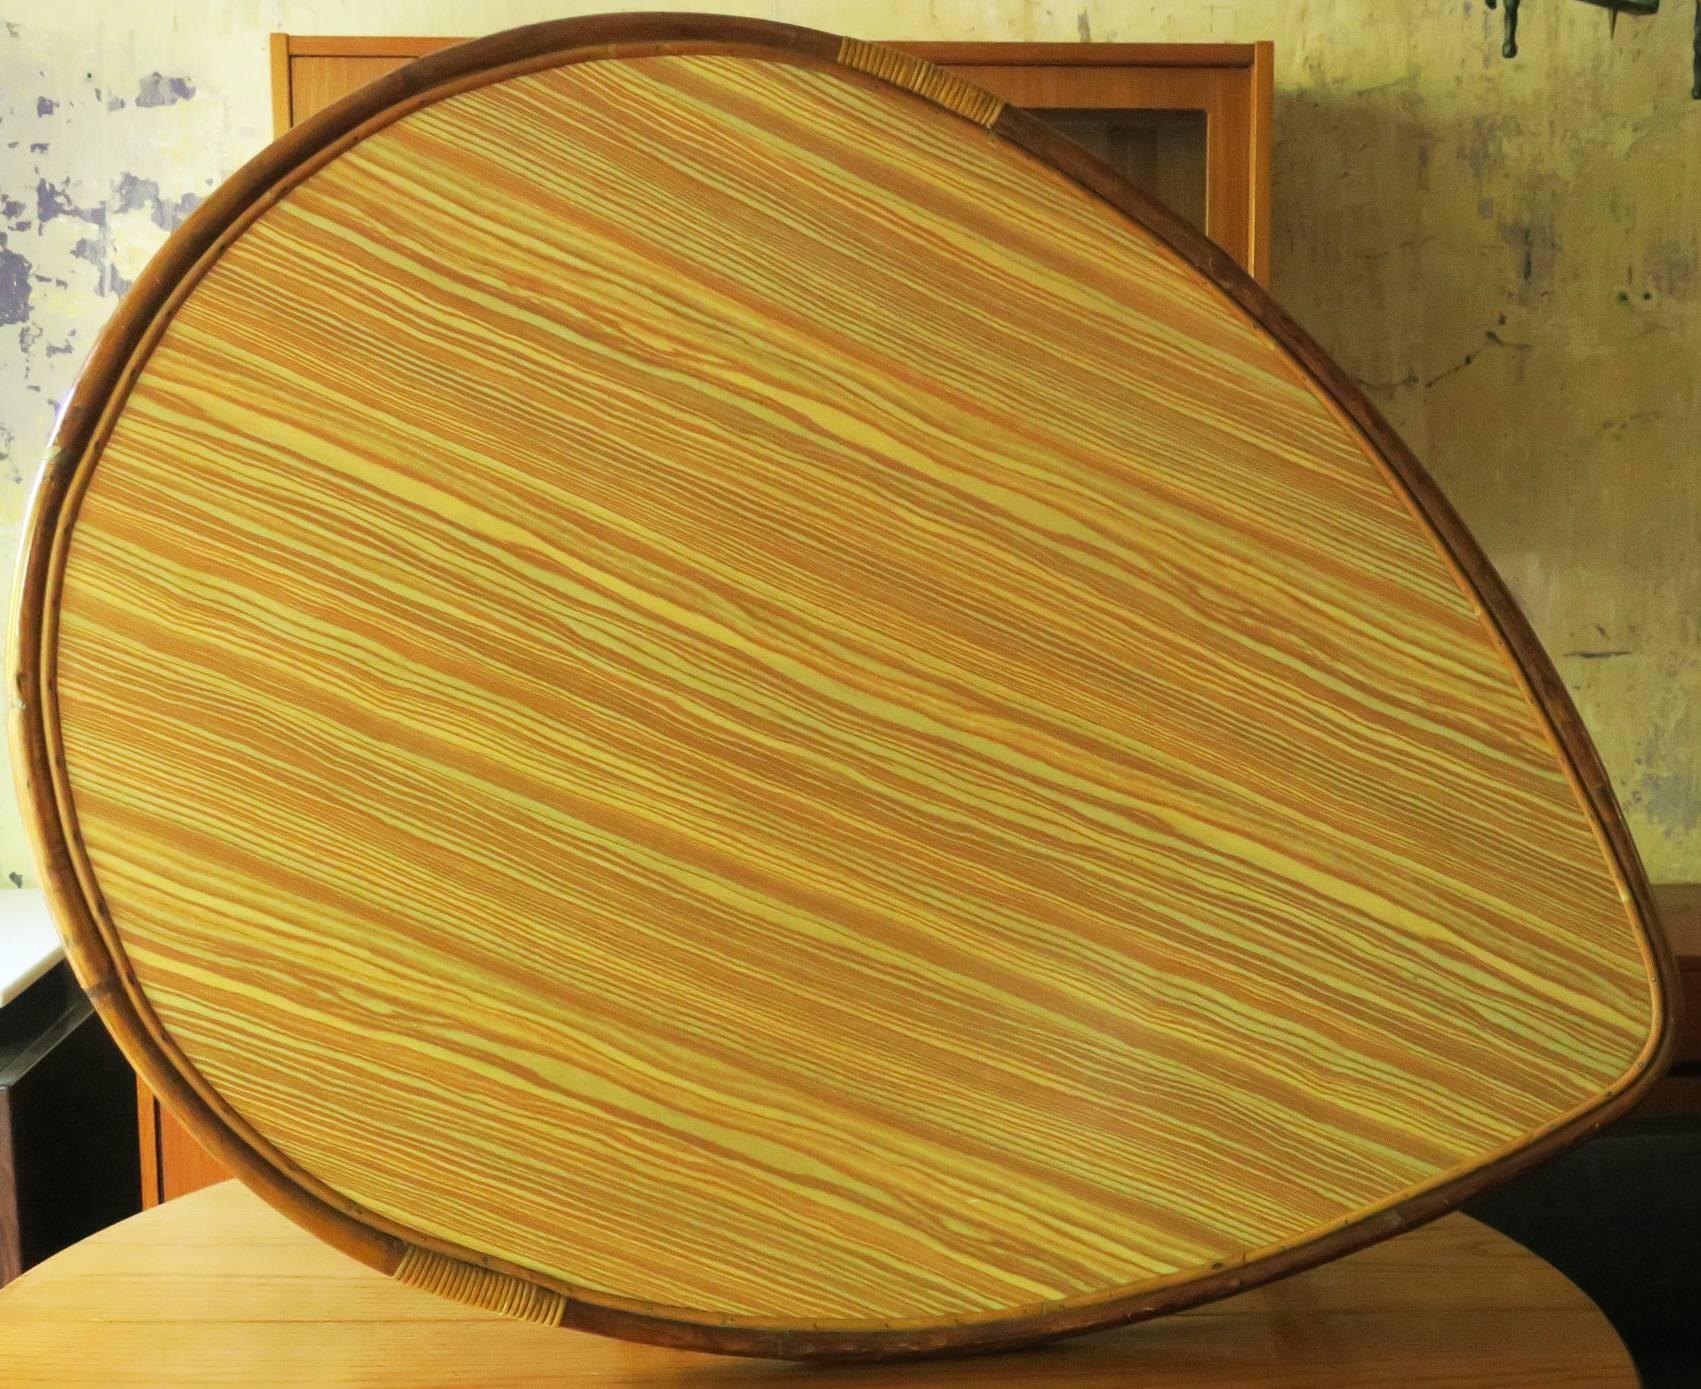 Unusual vintage bamboo leaf-shaped side or breakfast table.